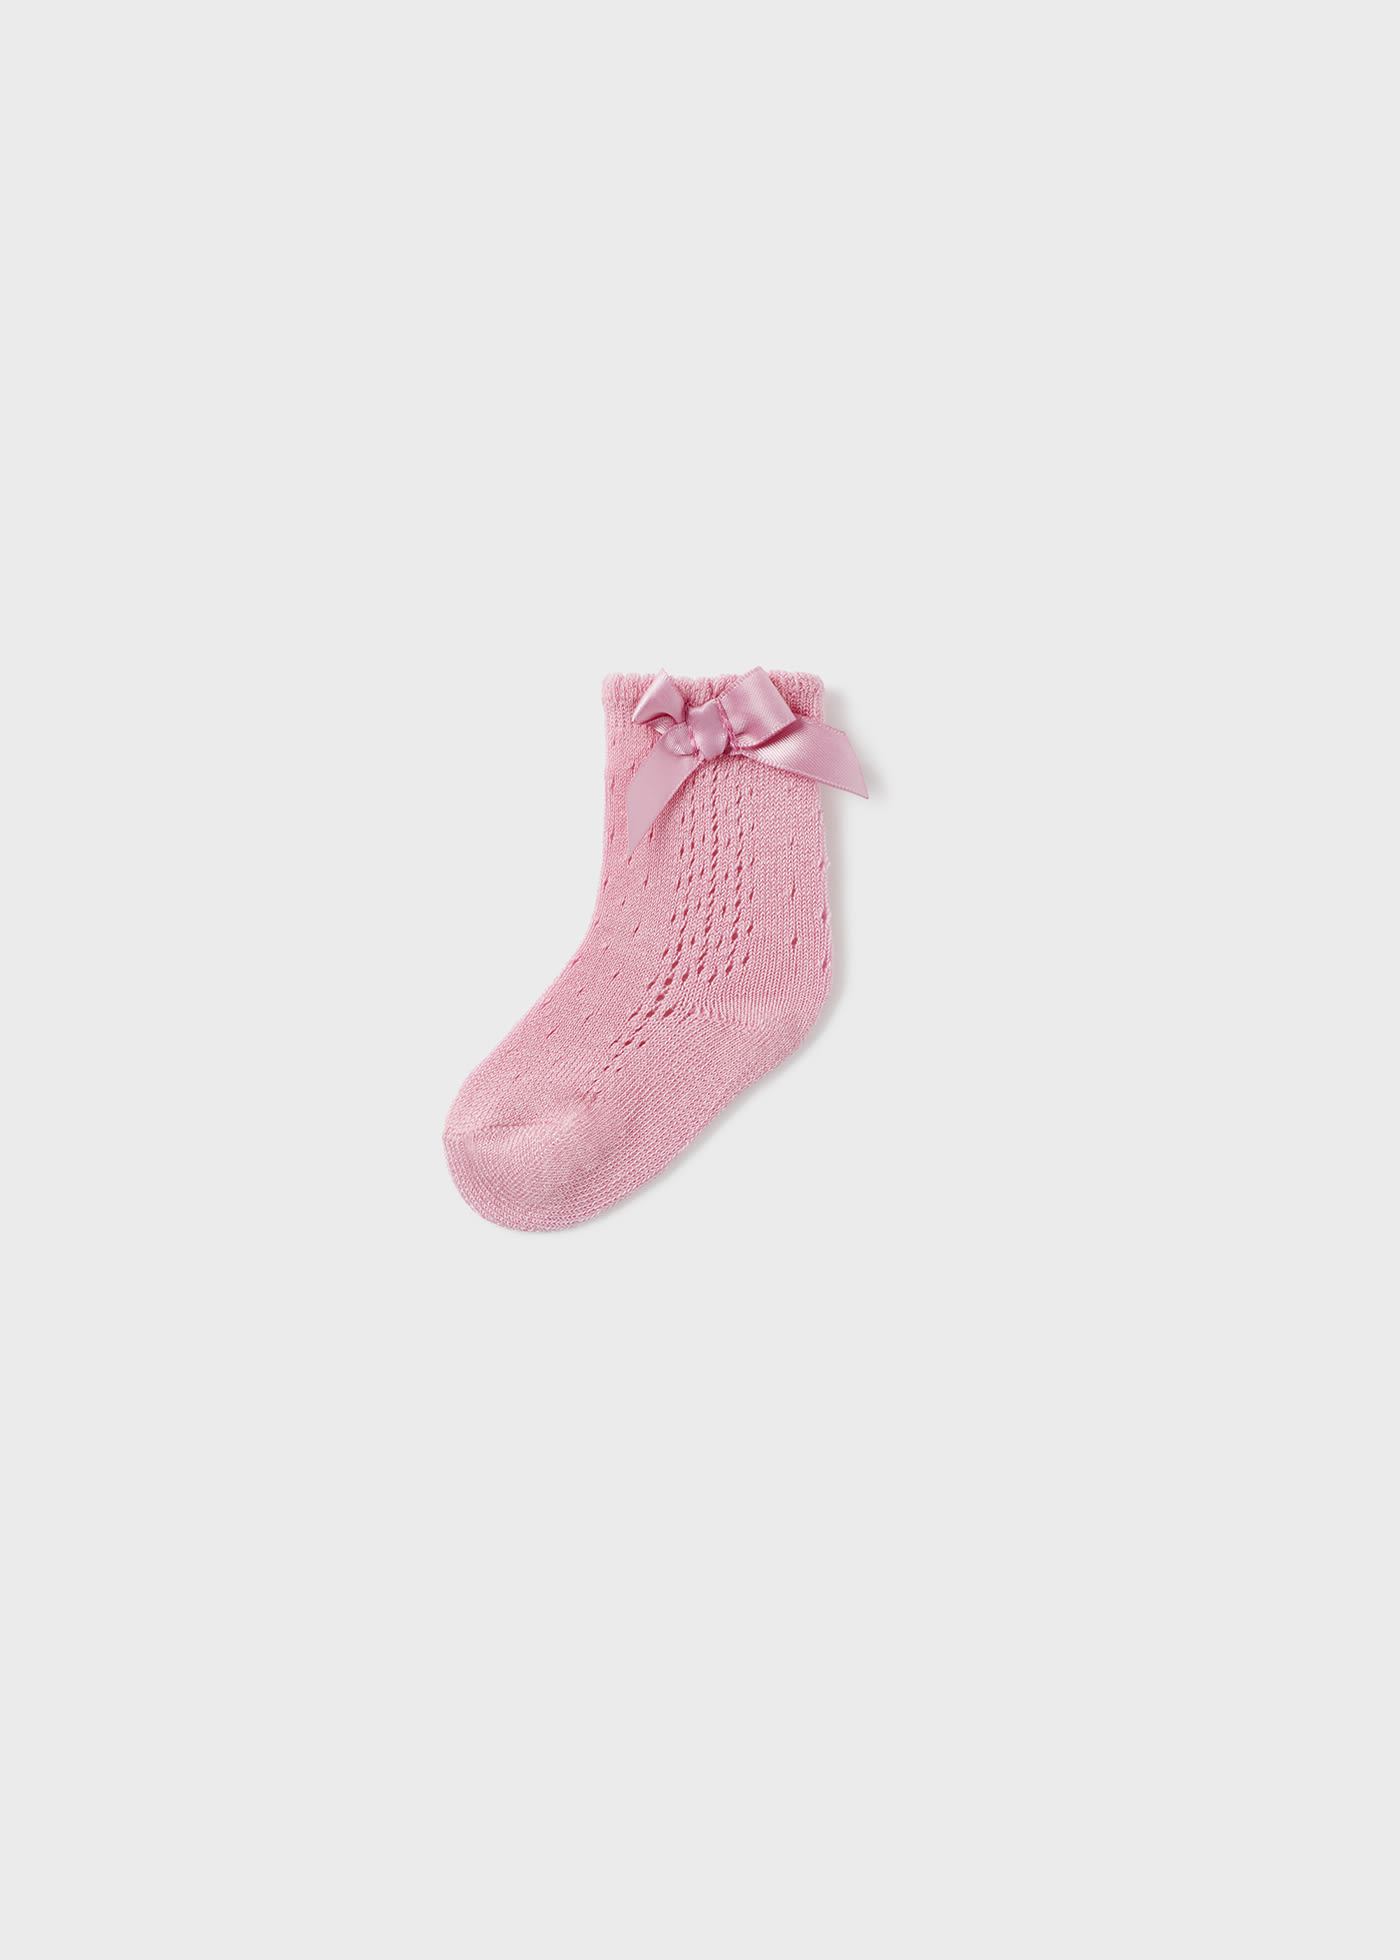 Socken Lochmuster Neugeborene